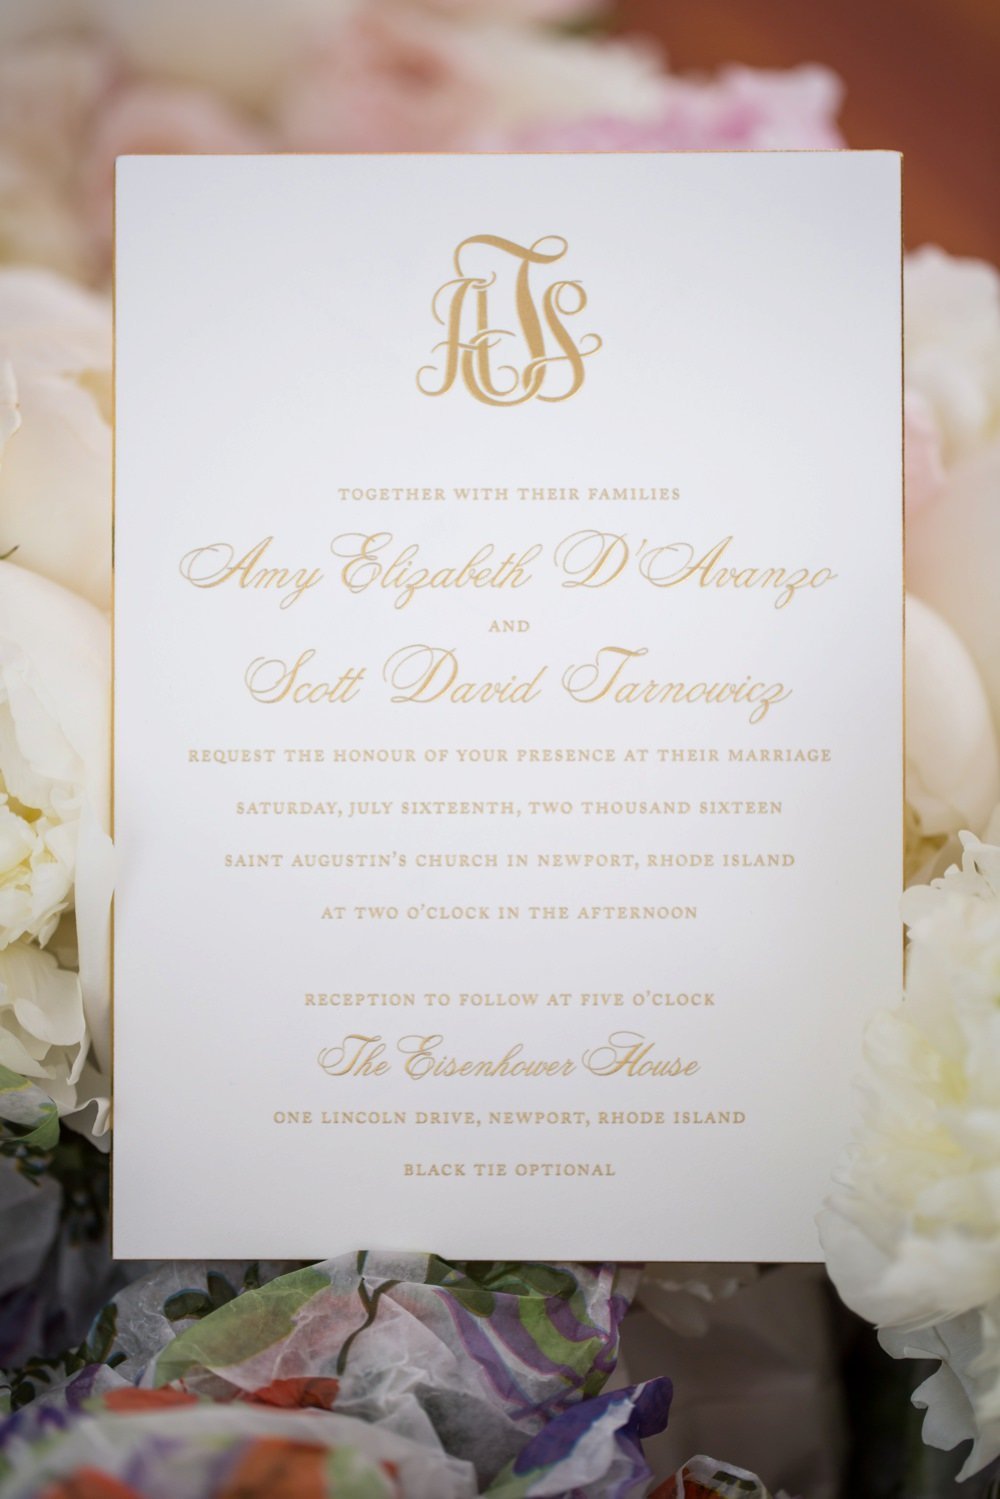 Classic monogramed wedding invitation in gold foil for Eisenhower House wedding